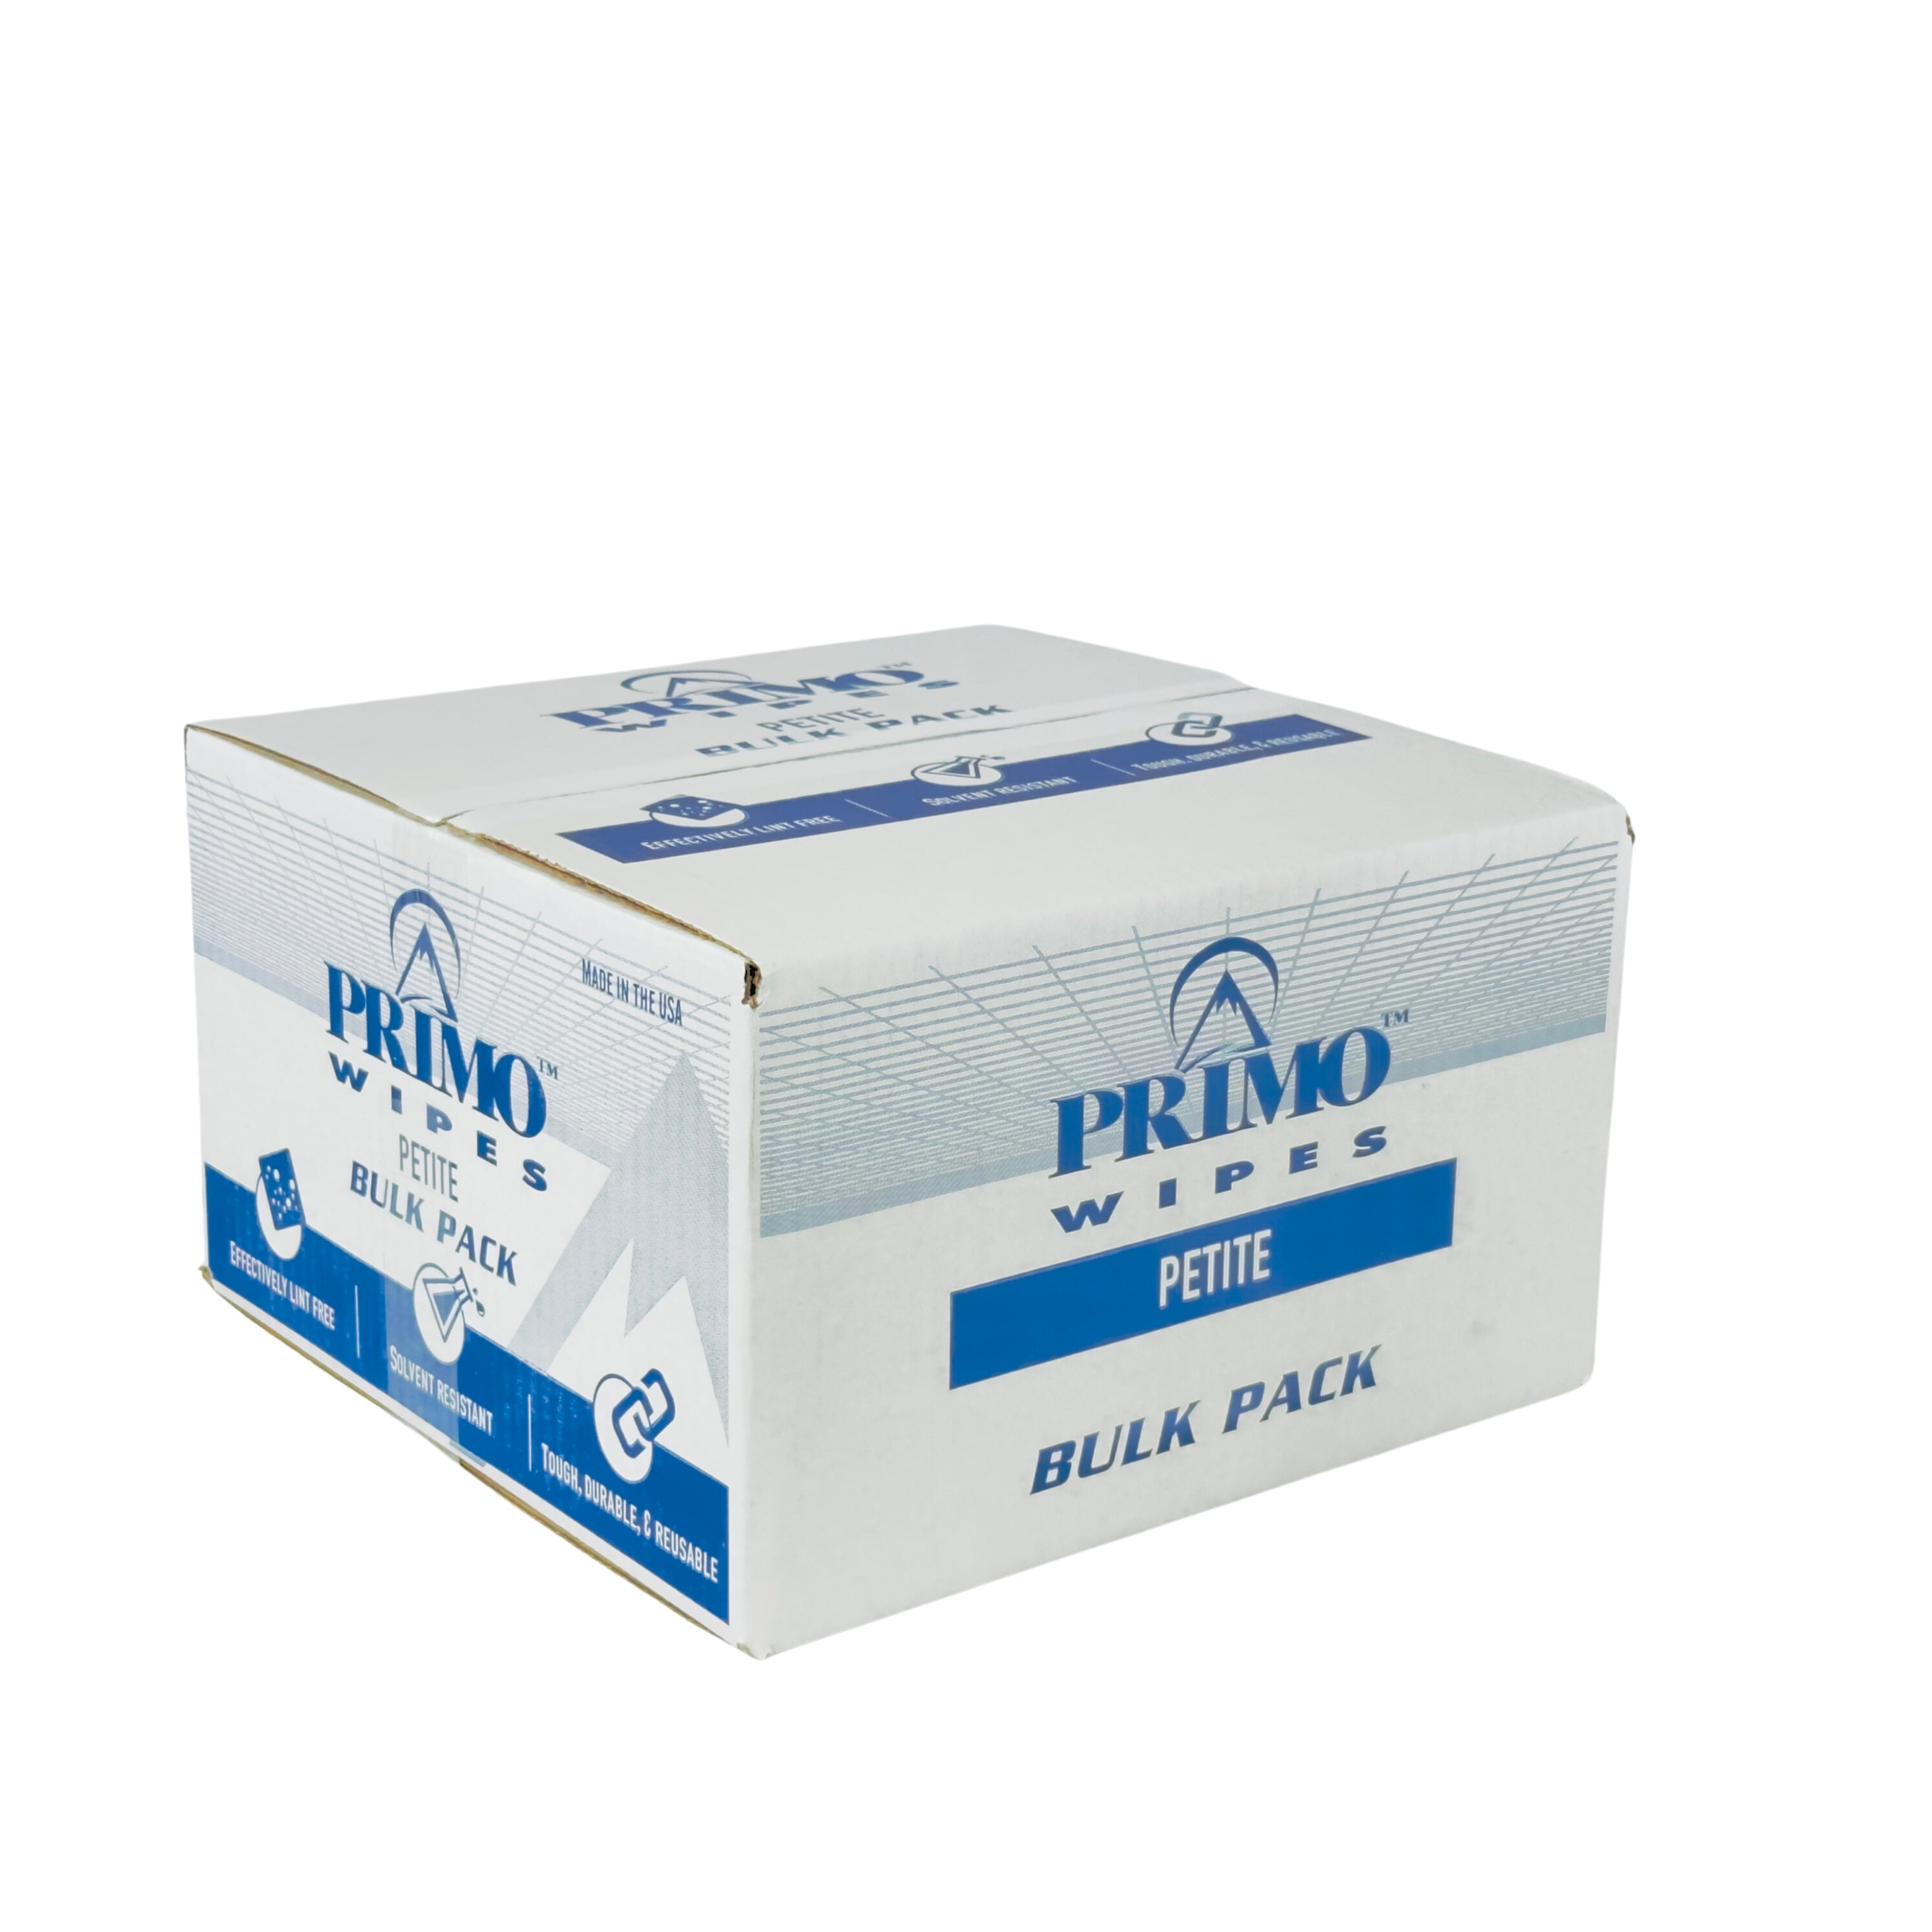 Primo® Wipes Petite White Shop Towels Telesto Products LLC